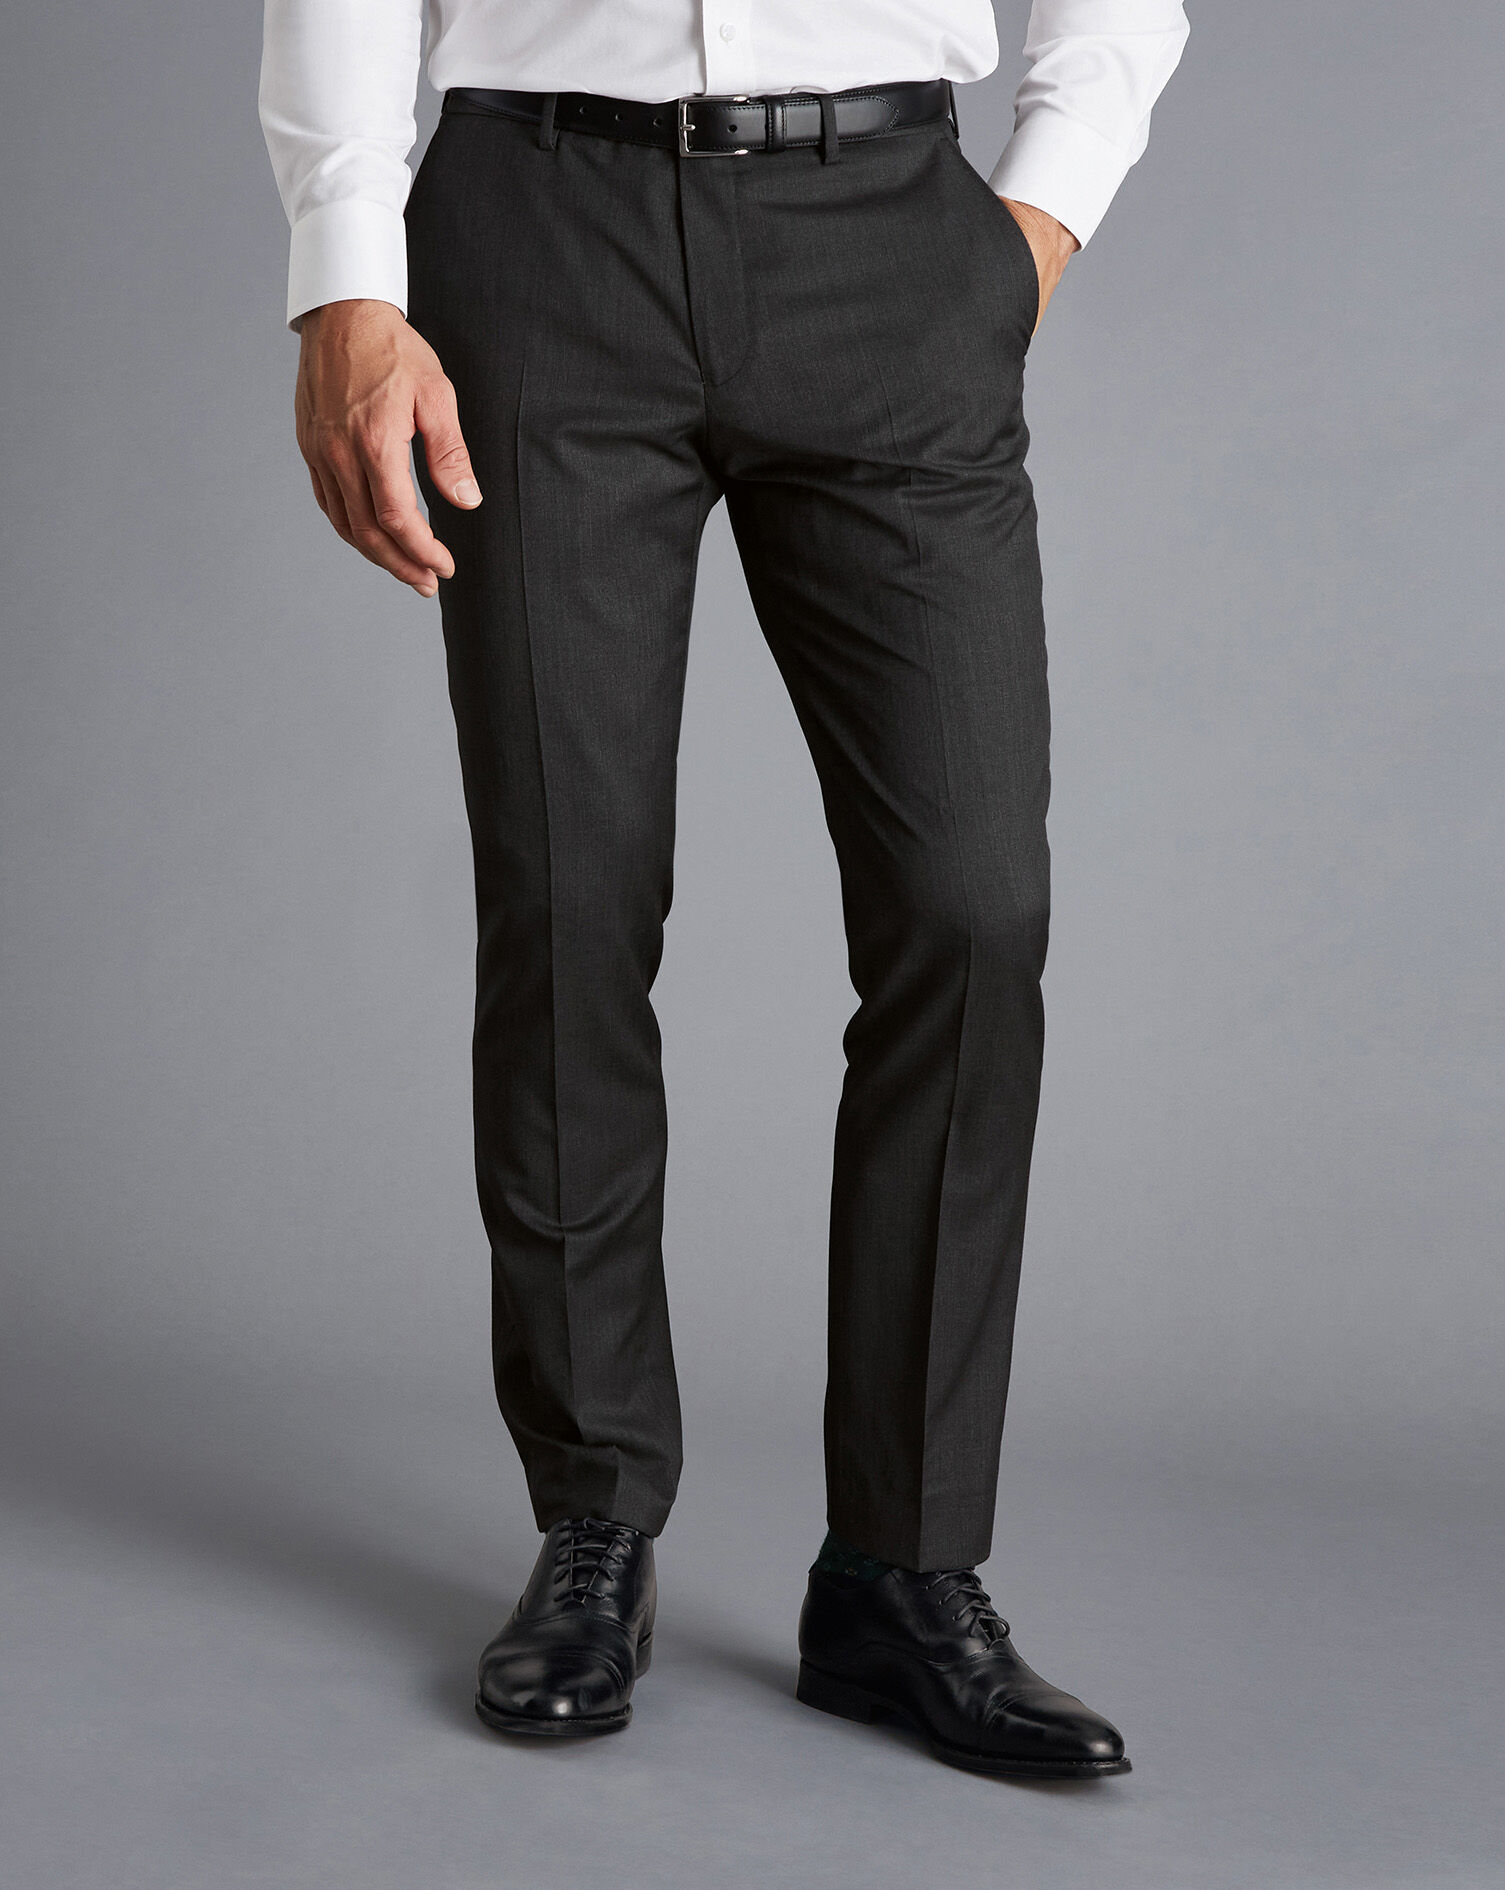 Mens Grey Tailored Suit TrousersSavile Row Company  Savile Row Co